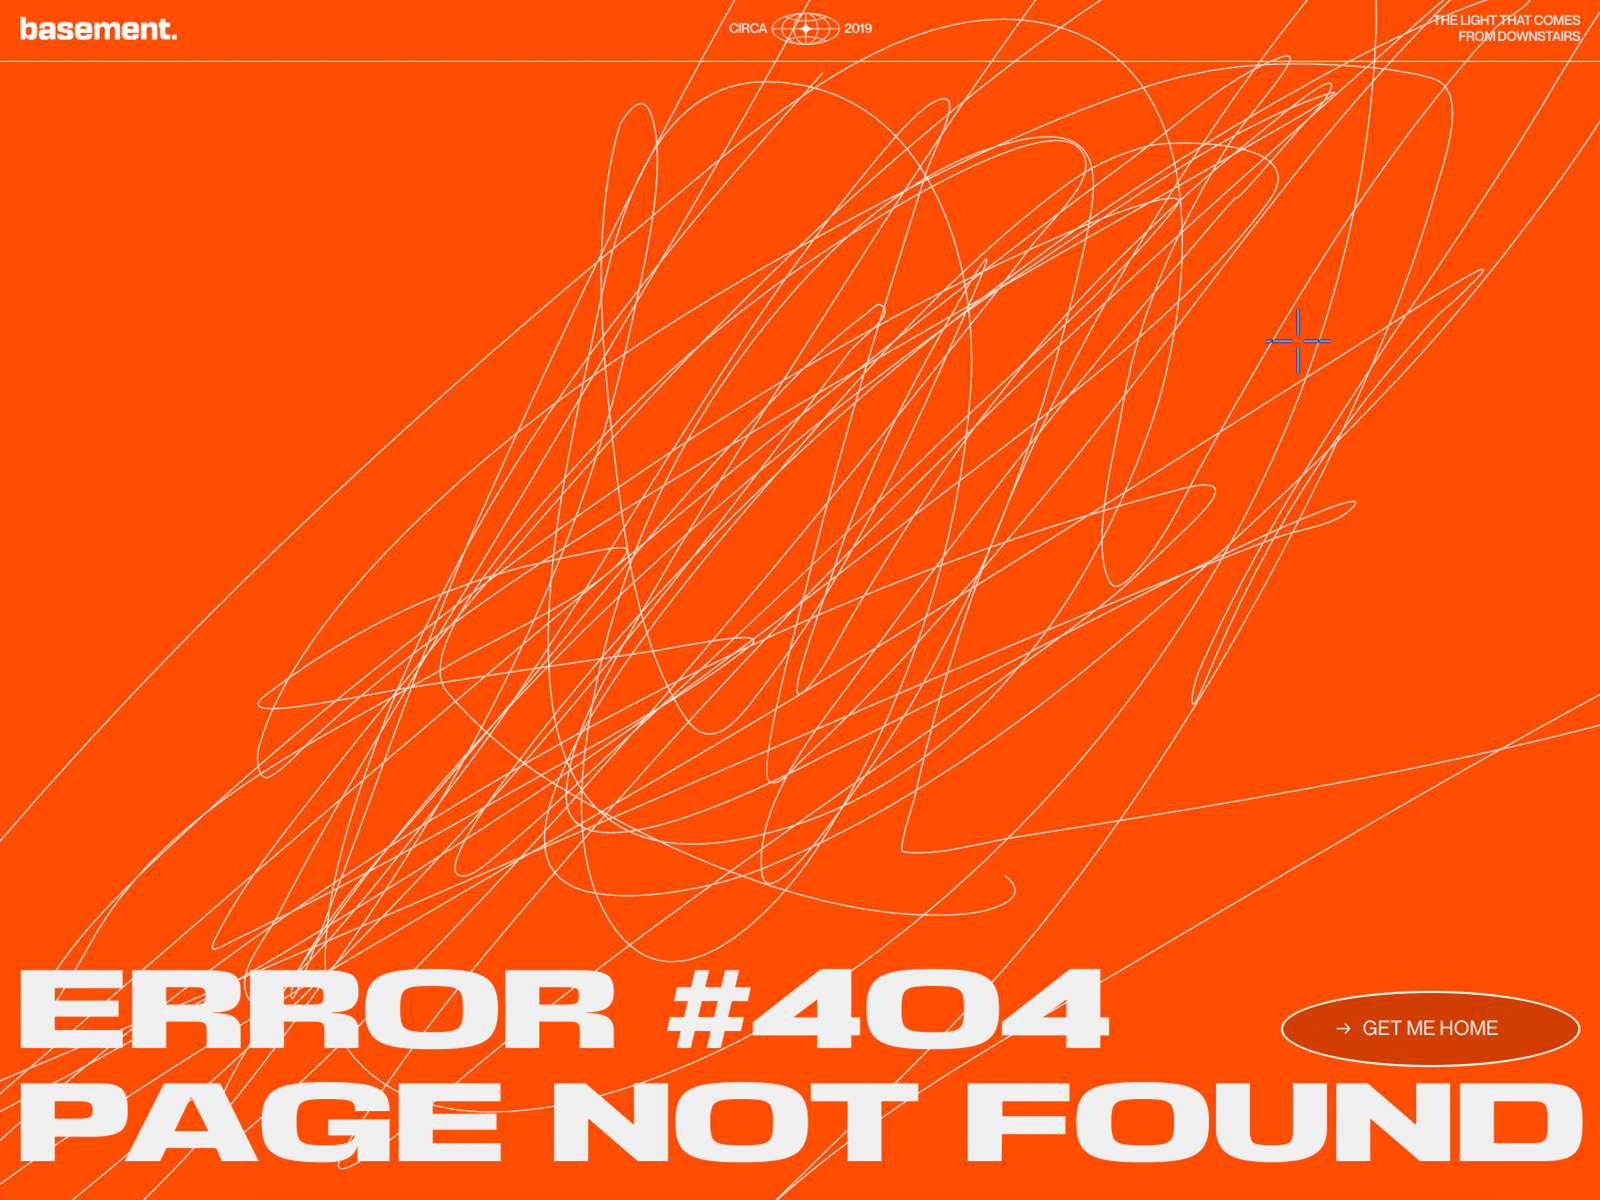 404 error page - Basement Studio